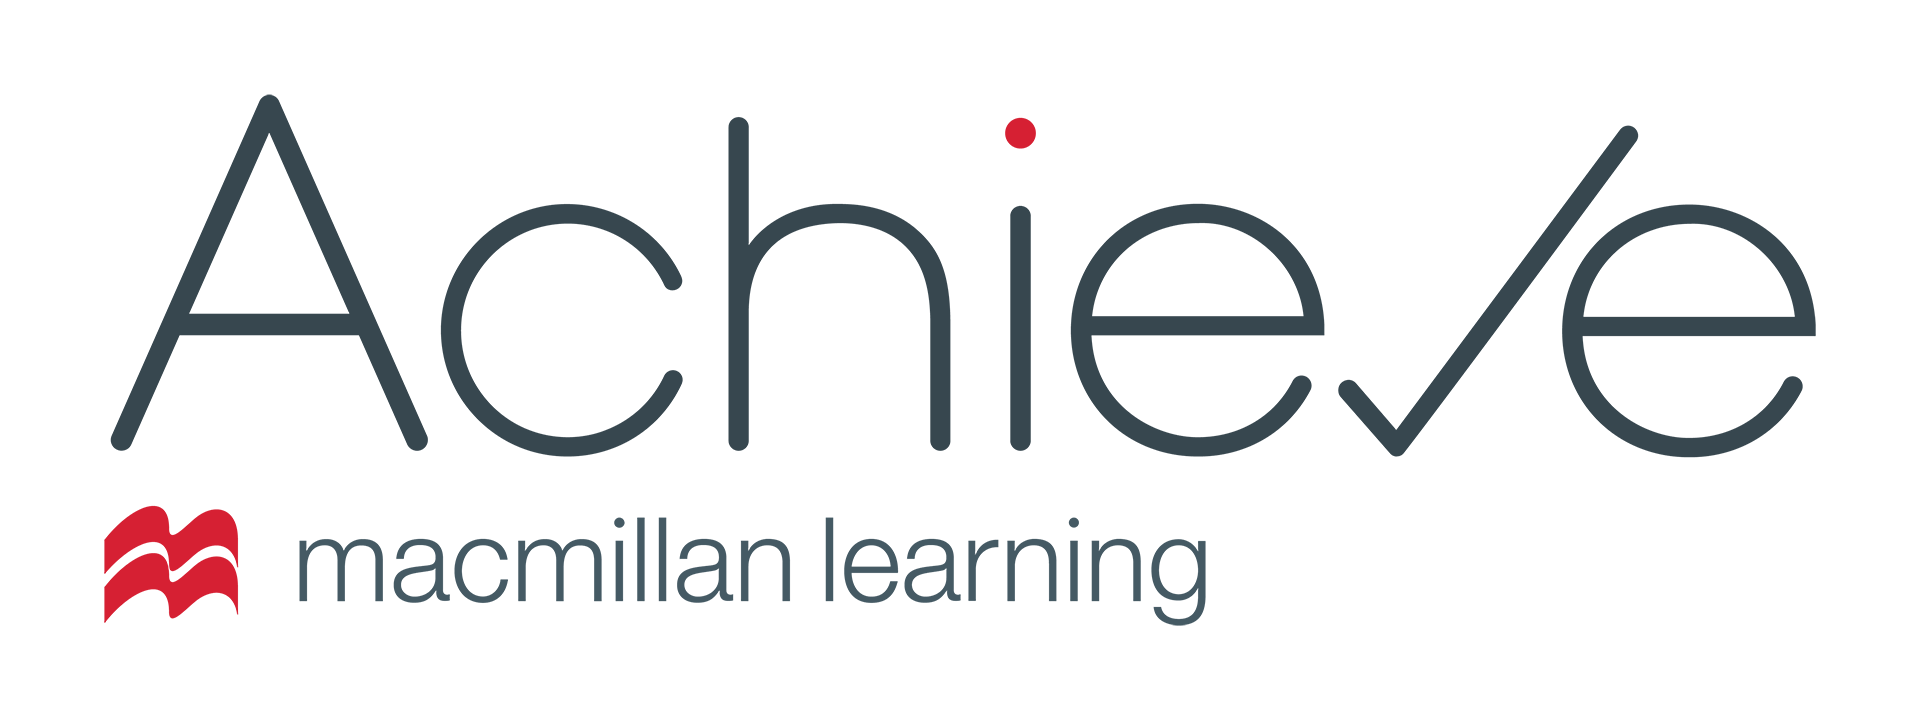 achieve macmillan learning logo